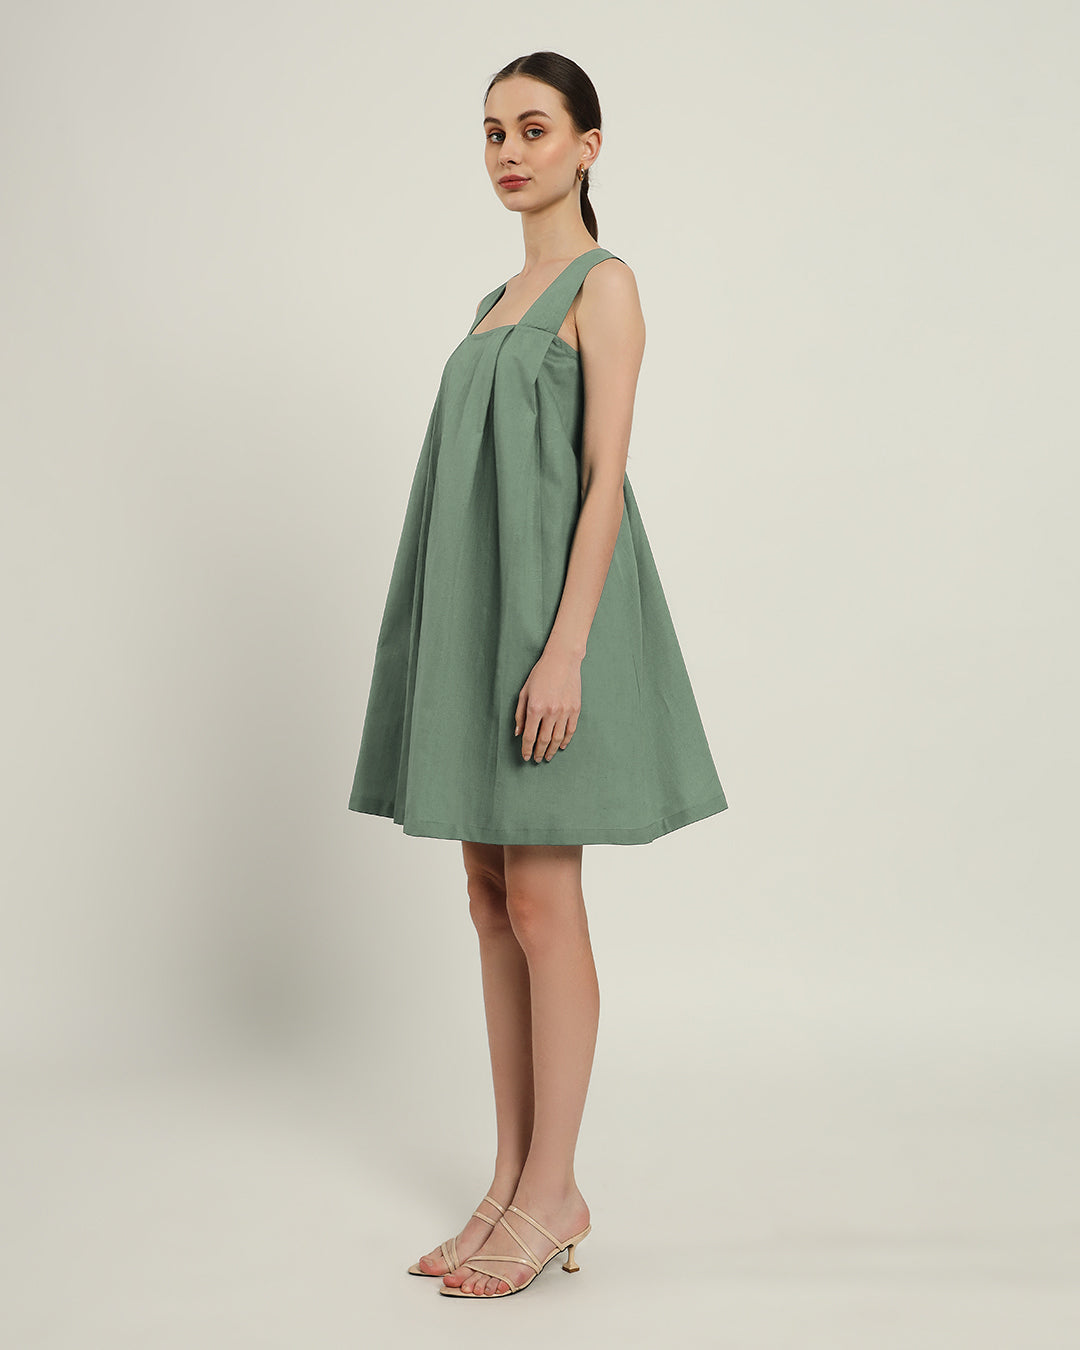 The Larissa Mint Cotton Dress